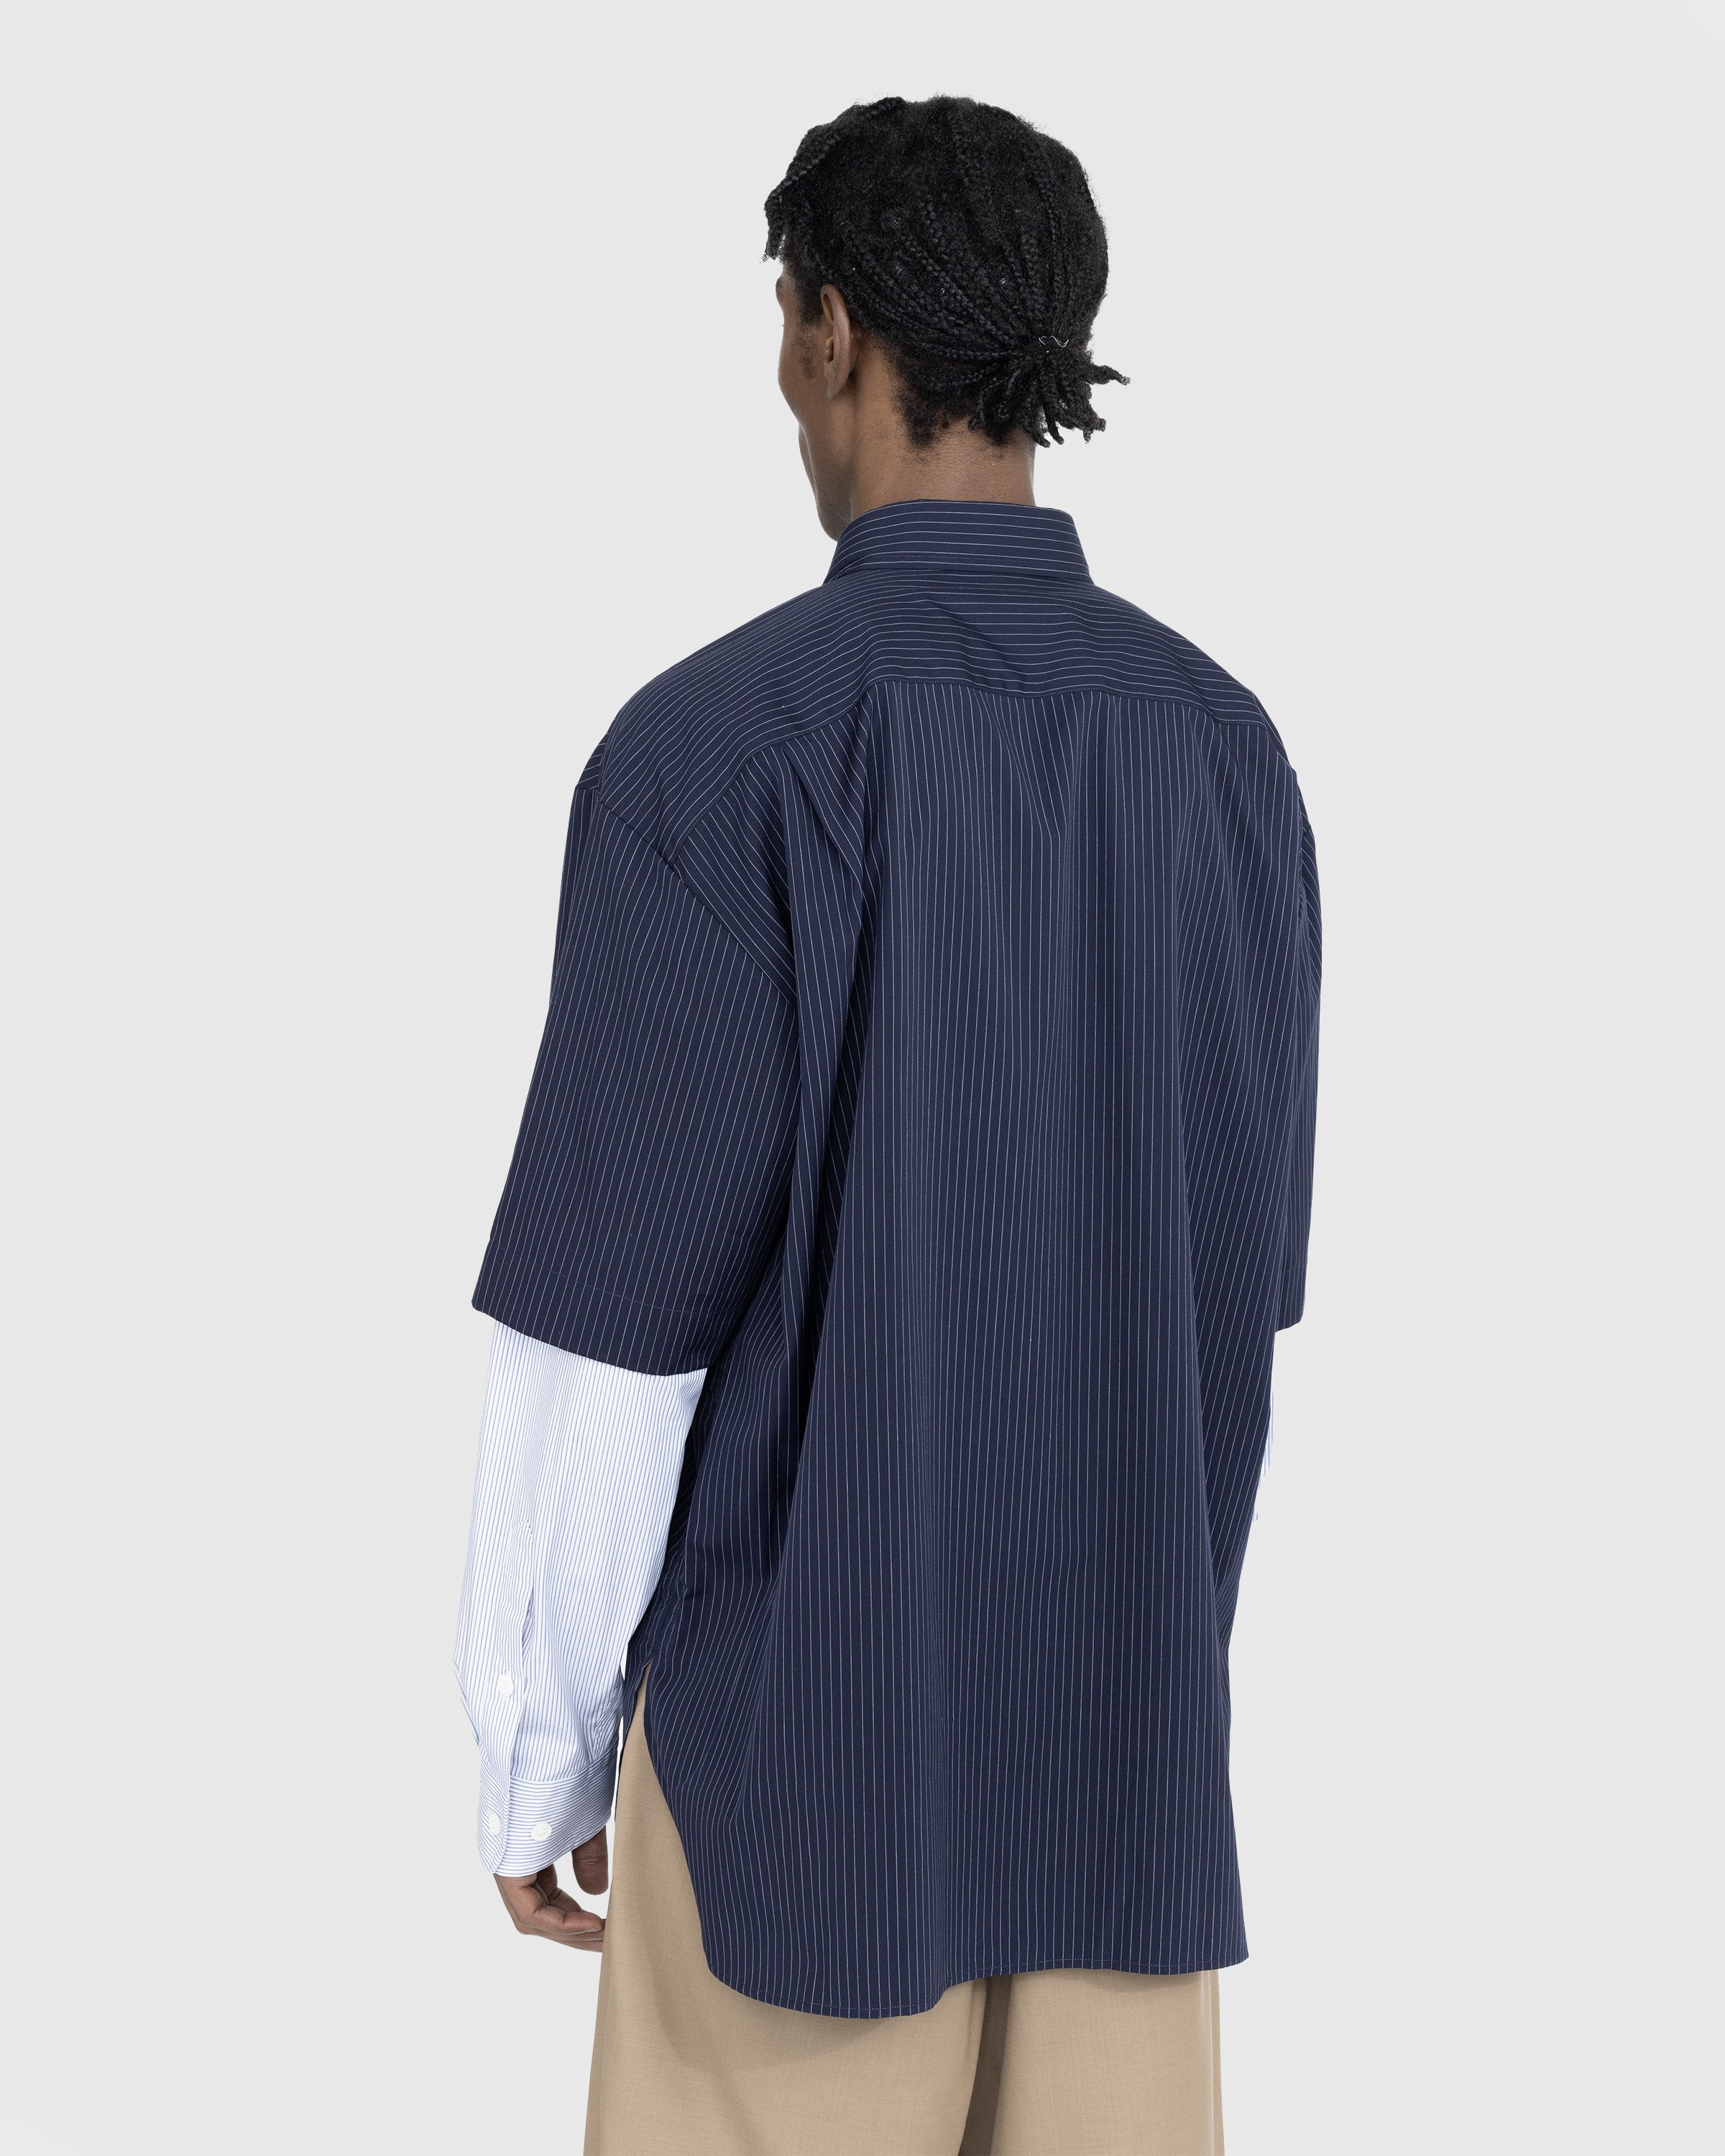 Dries van Noten - Carle Double Sleeve Shirt Navy - Clothing - Blue - Image 3